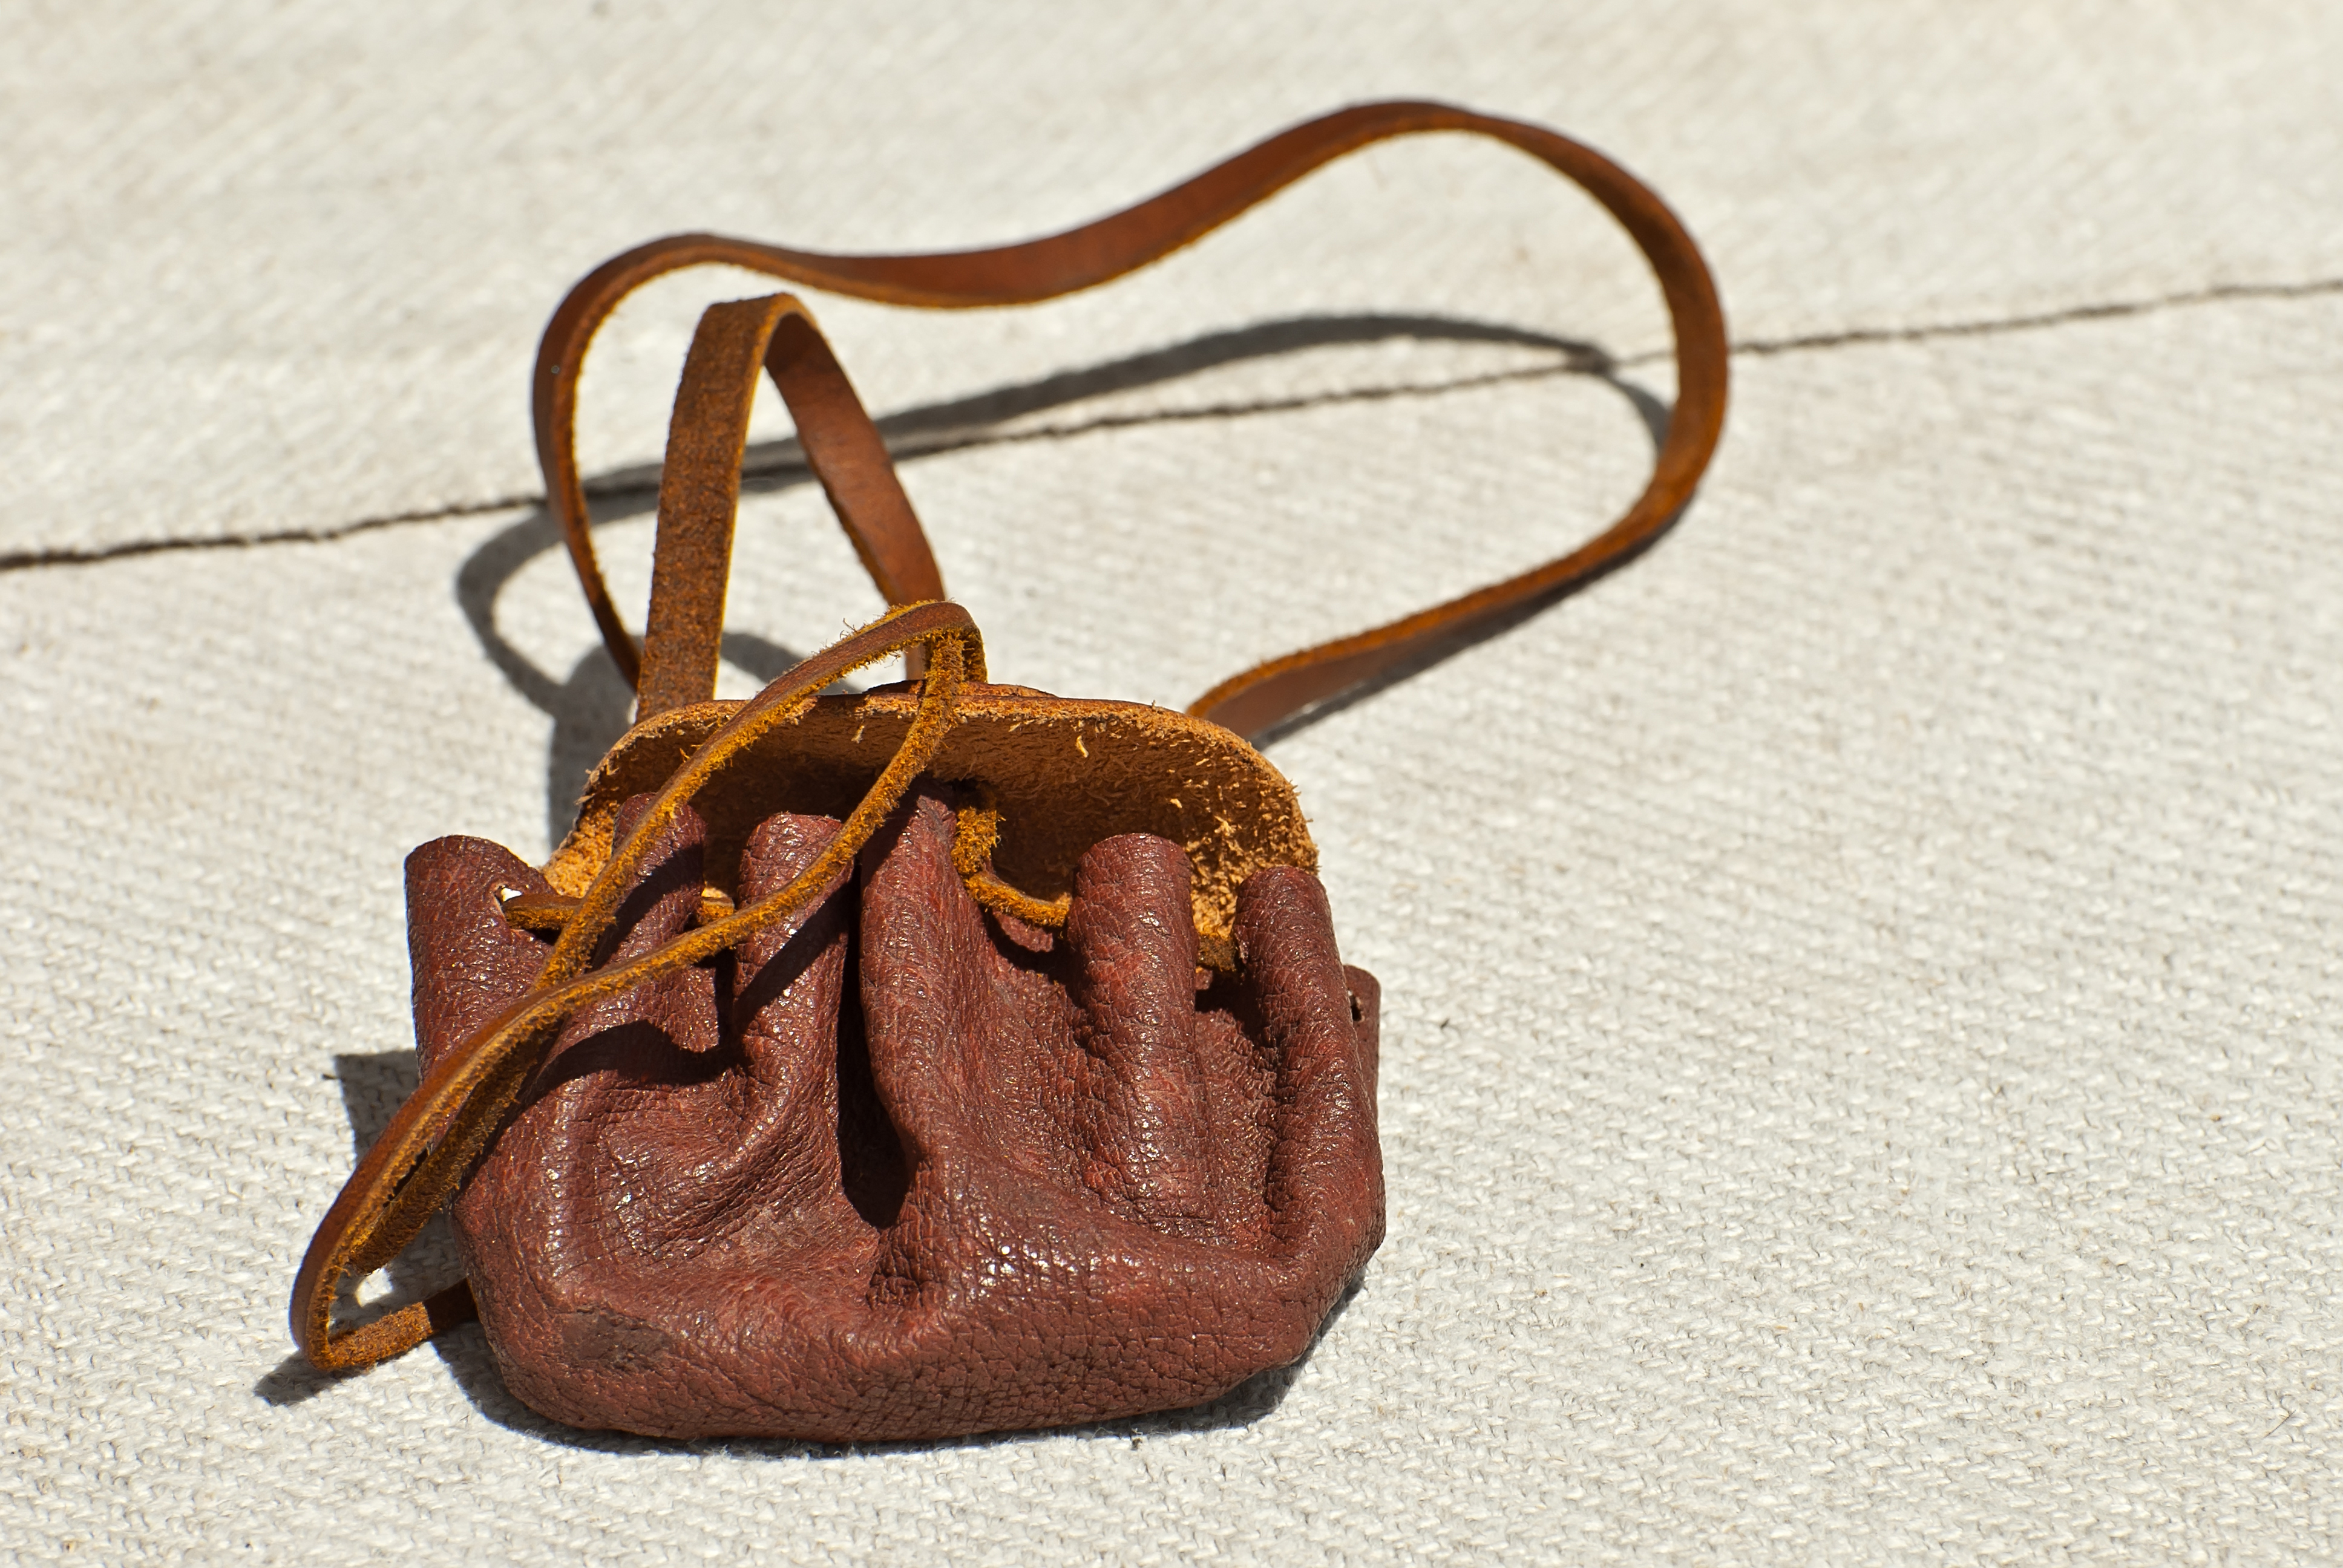 Un sac à main en cuir | Source : Shutterstock